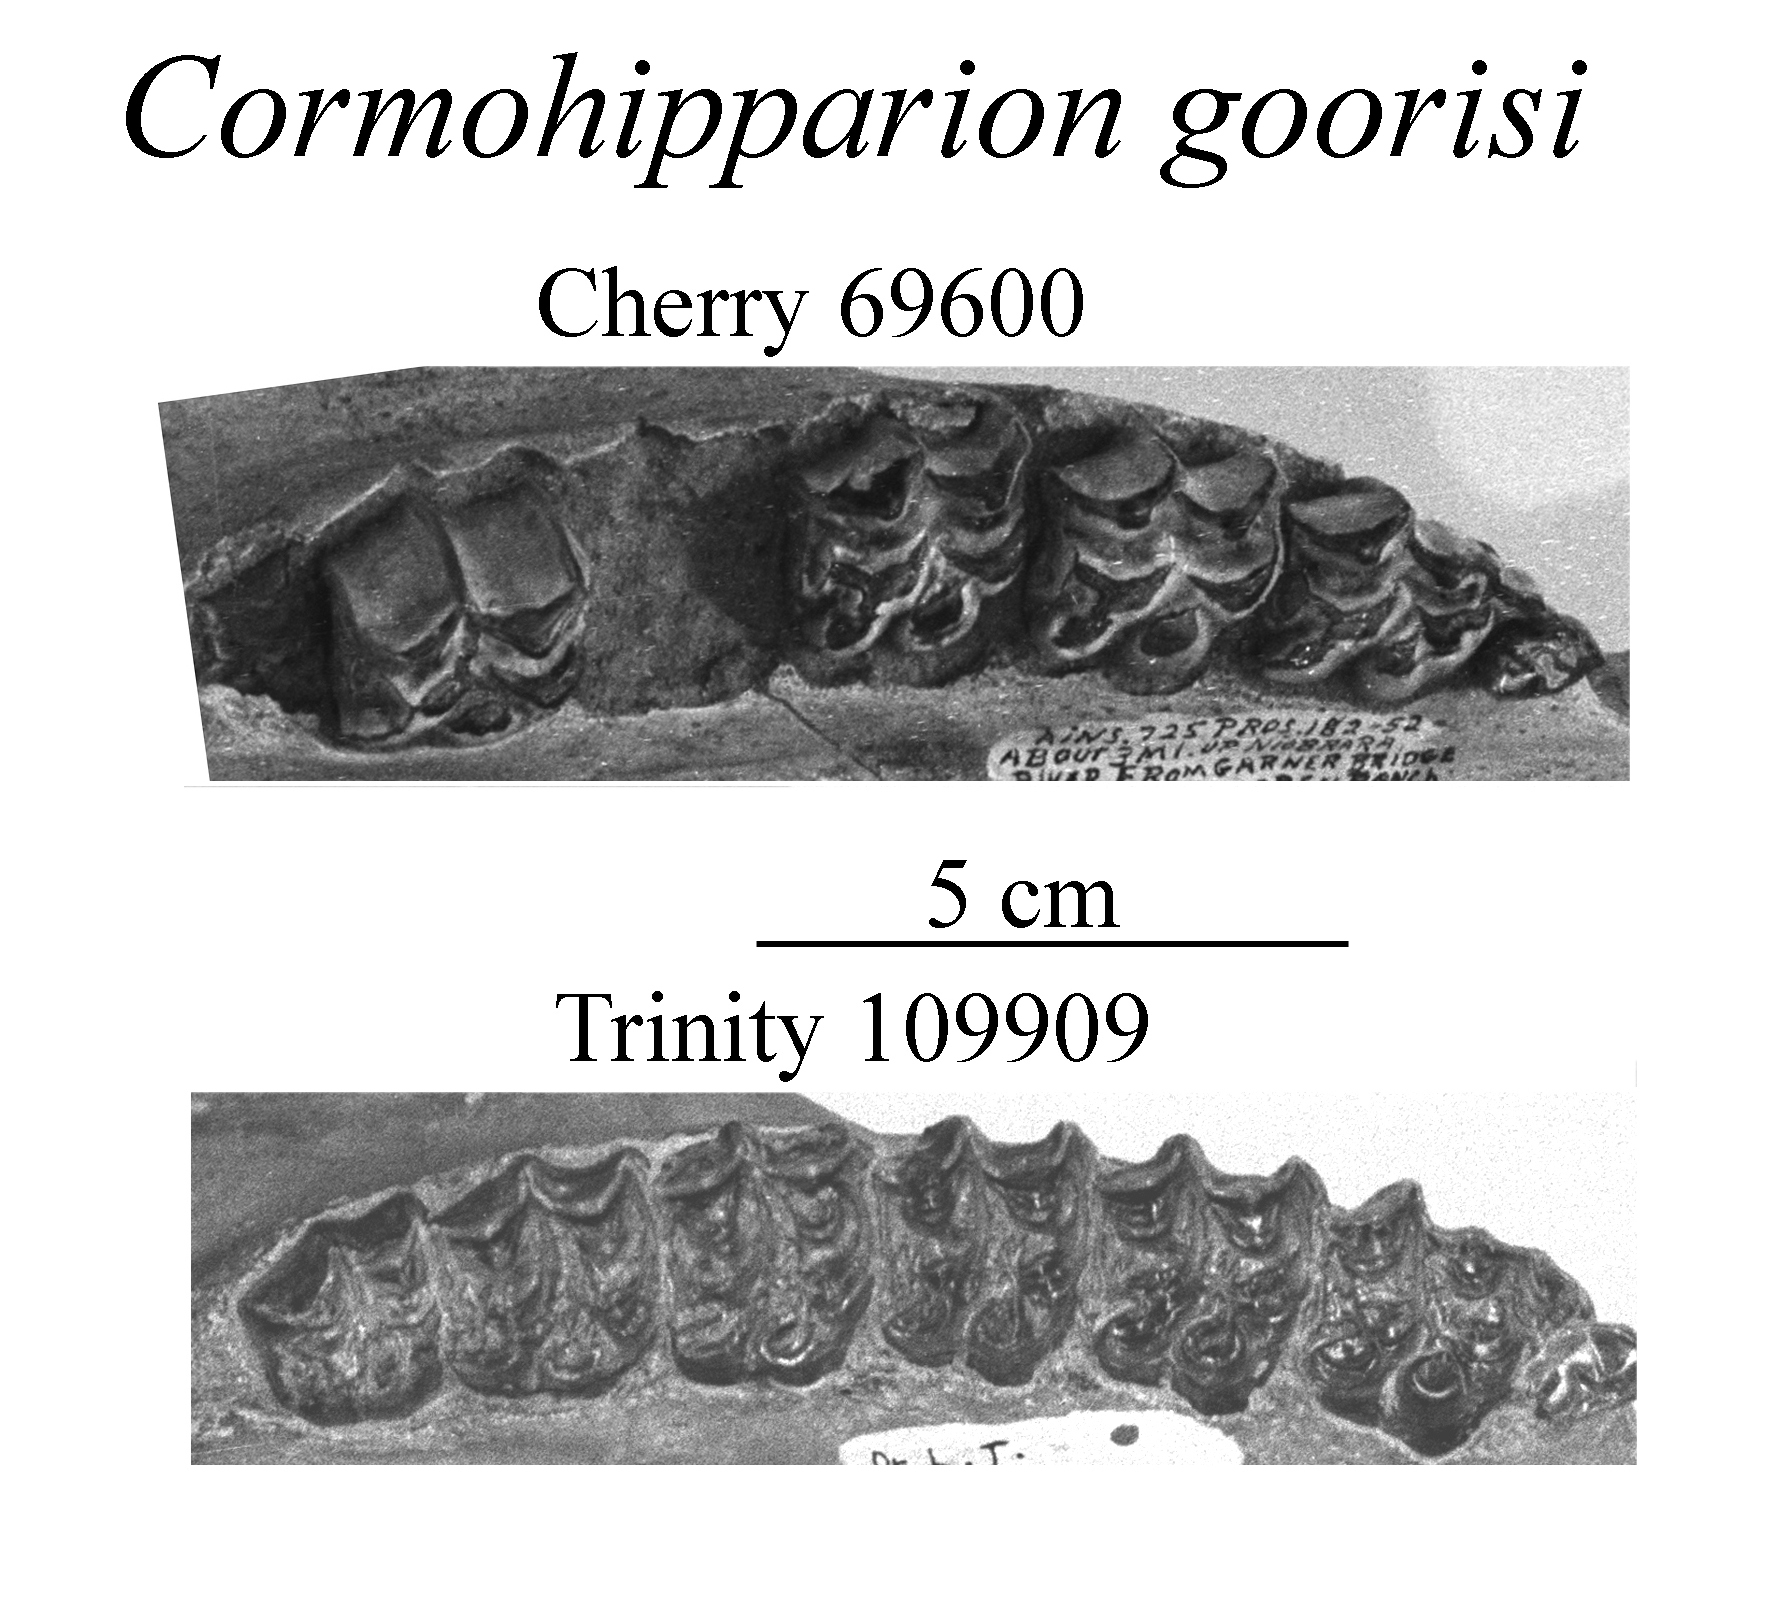 C. goorisi upper cheek teeth